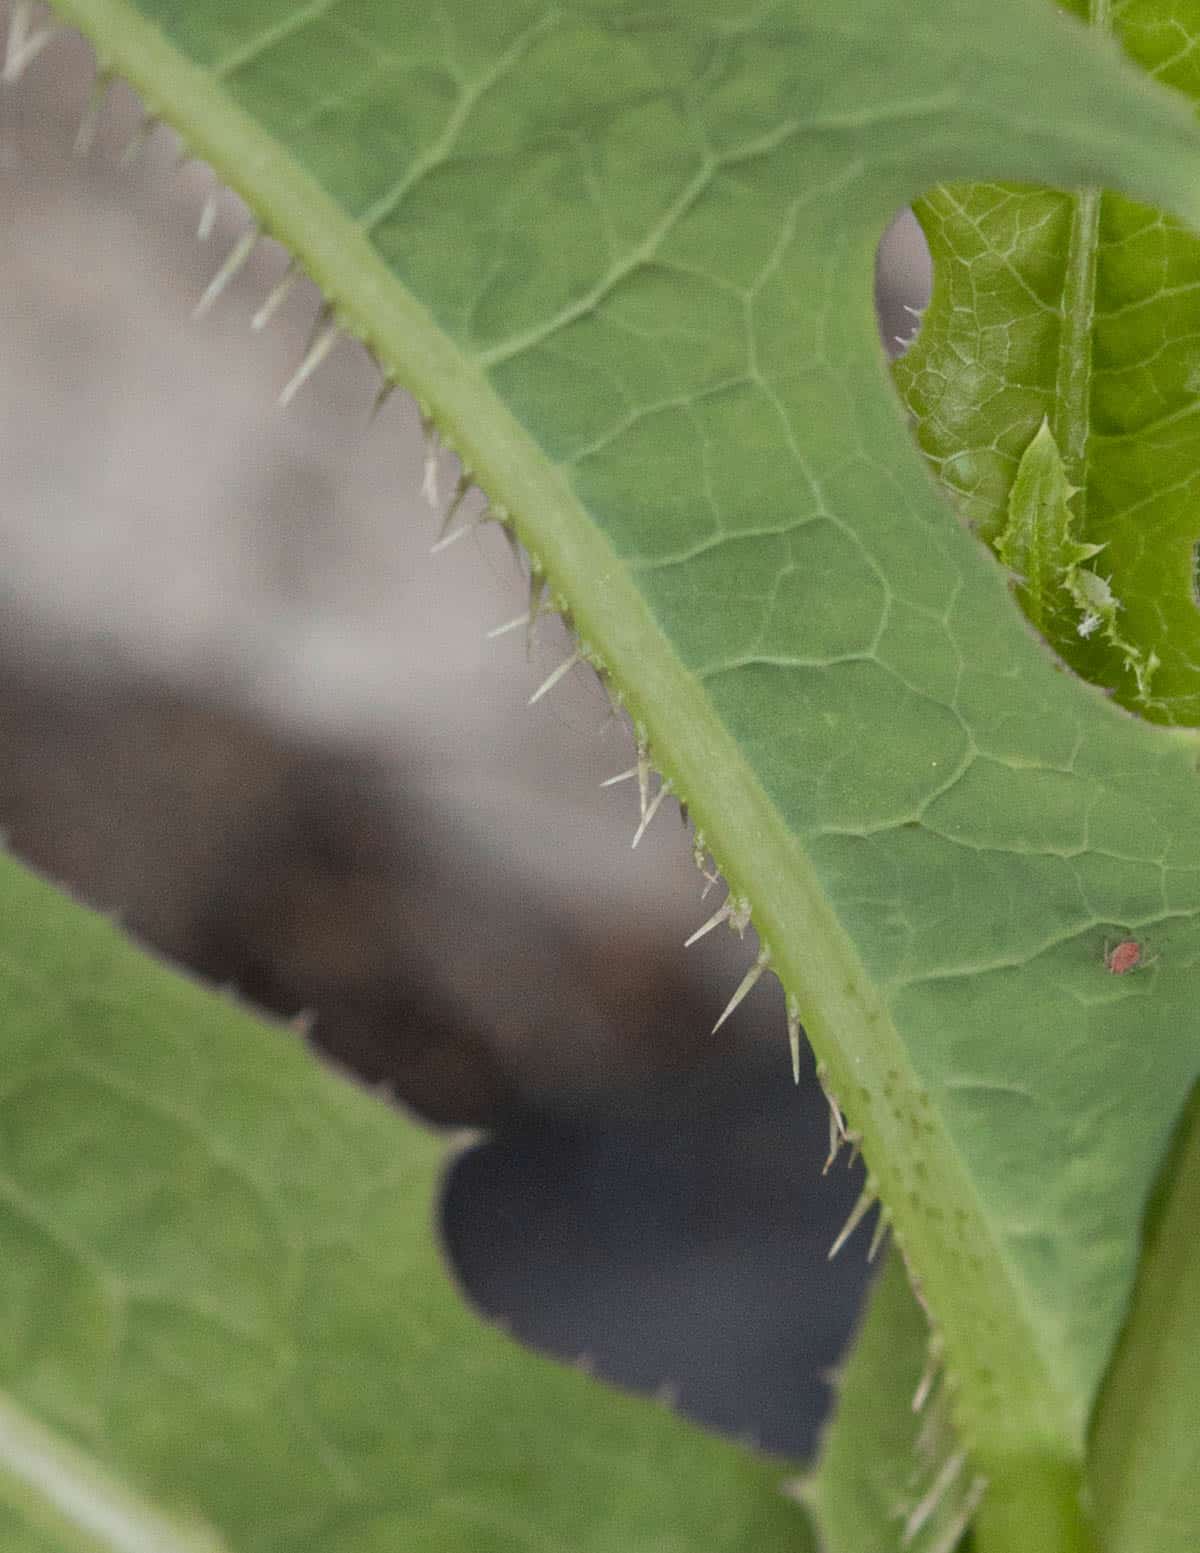 Mature L. serriola leaves showing spines on the midrib . 